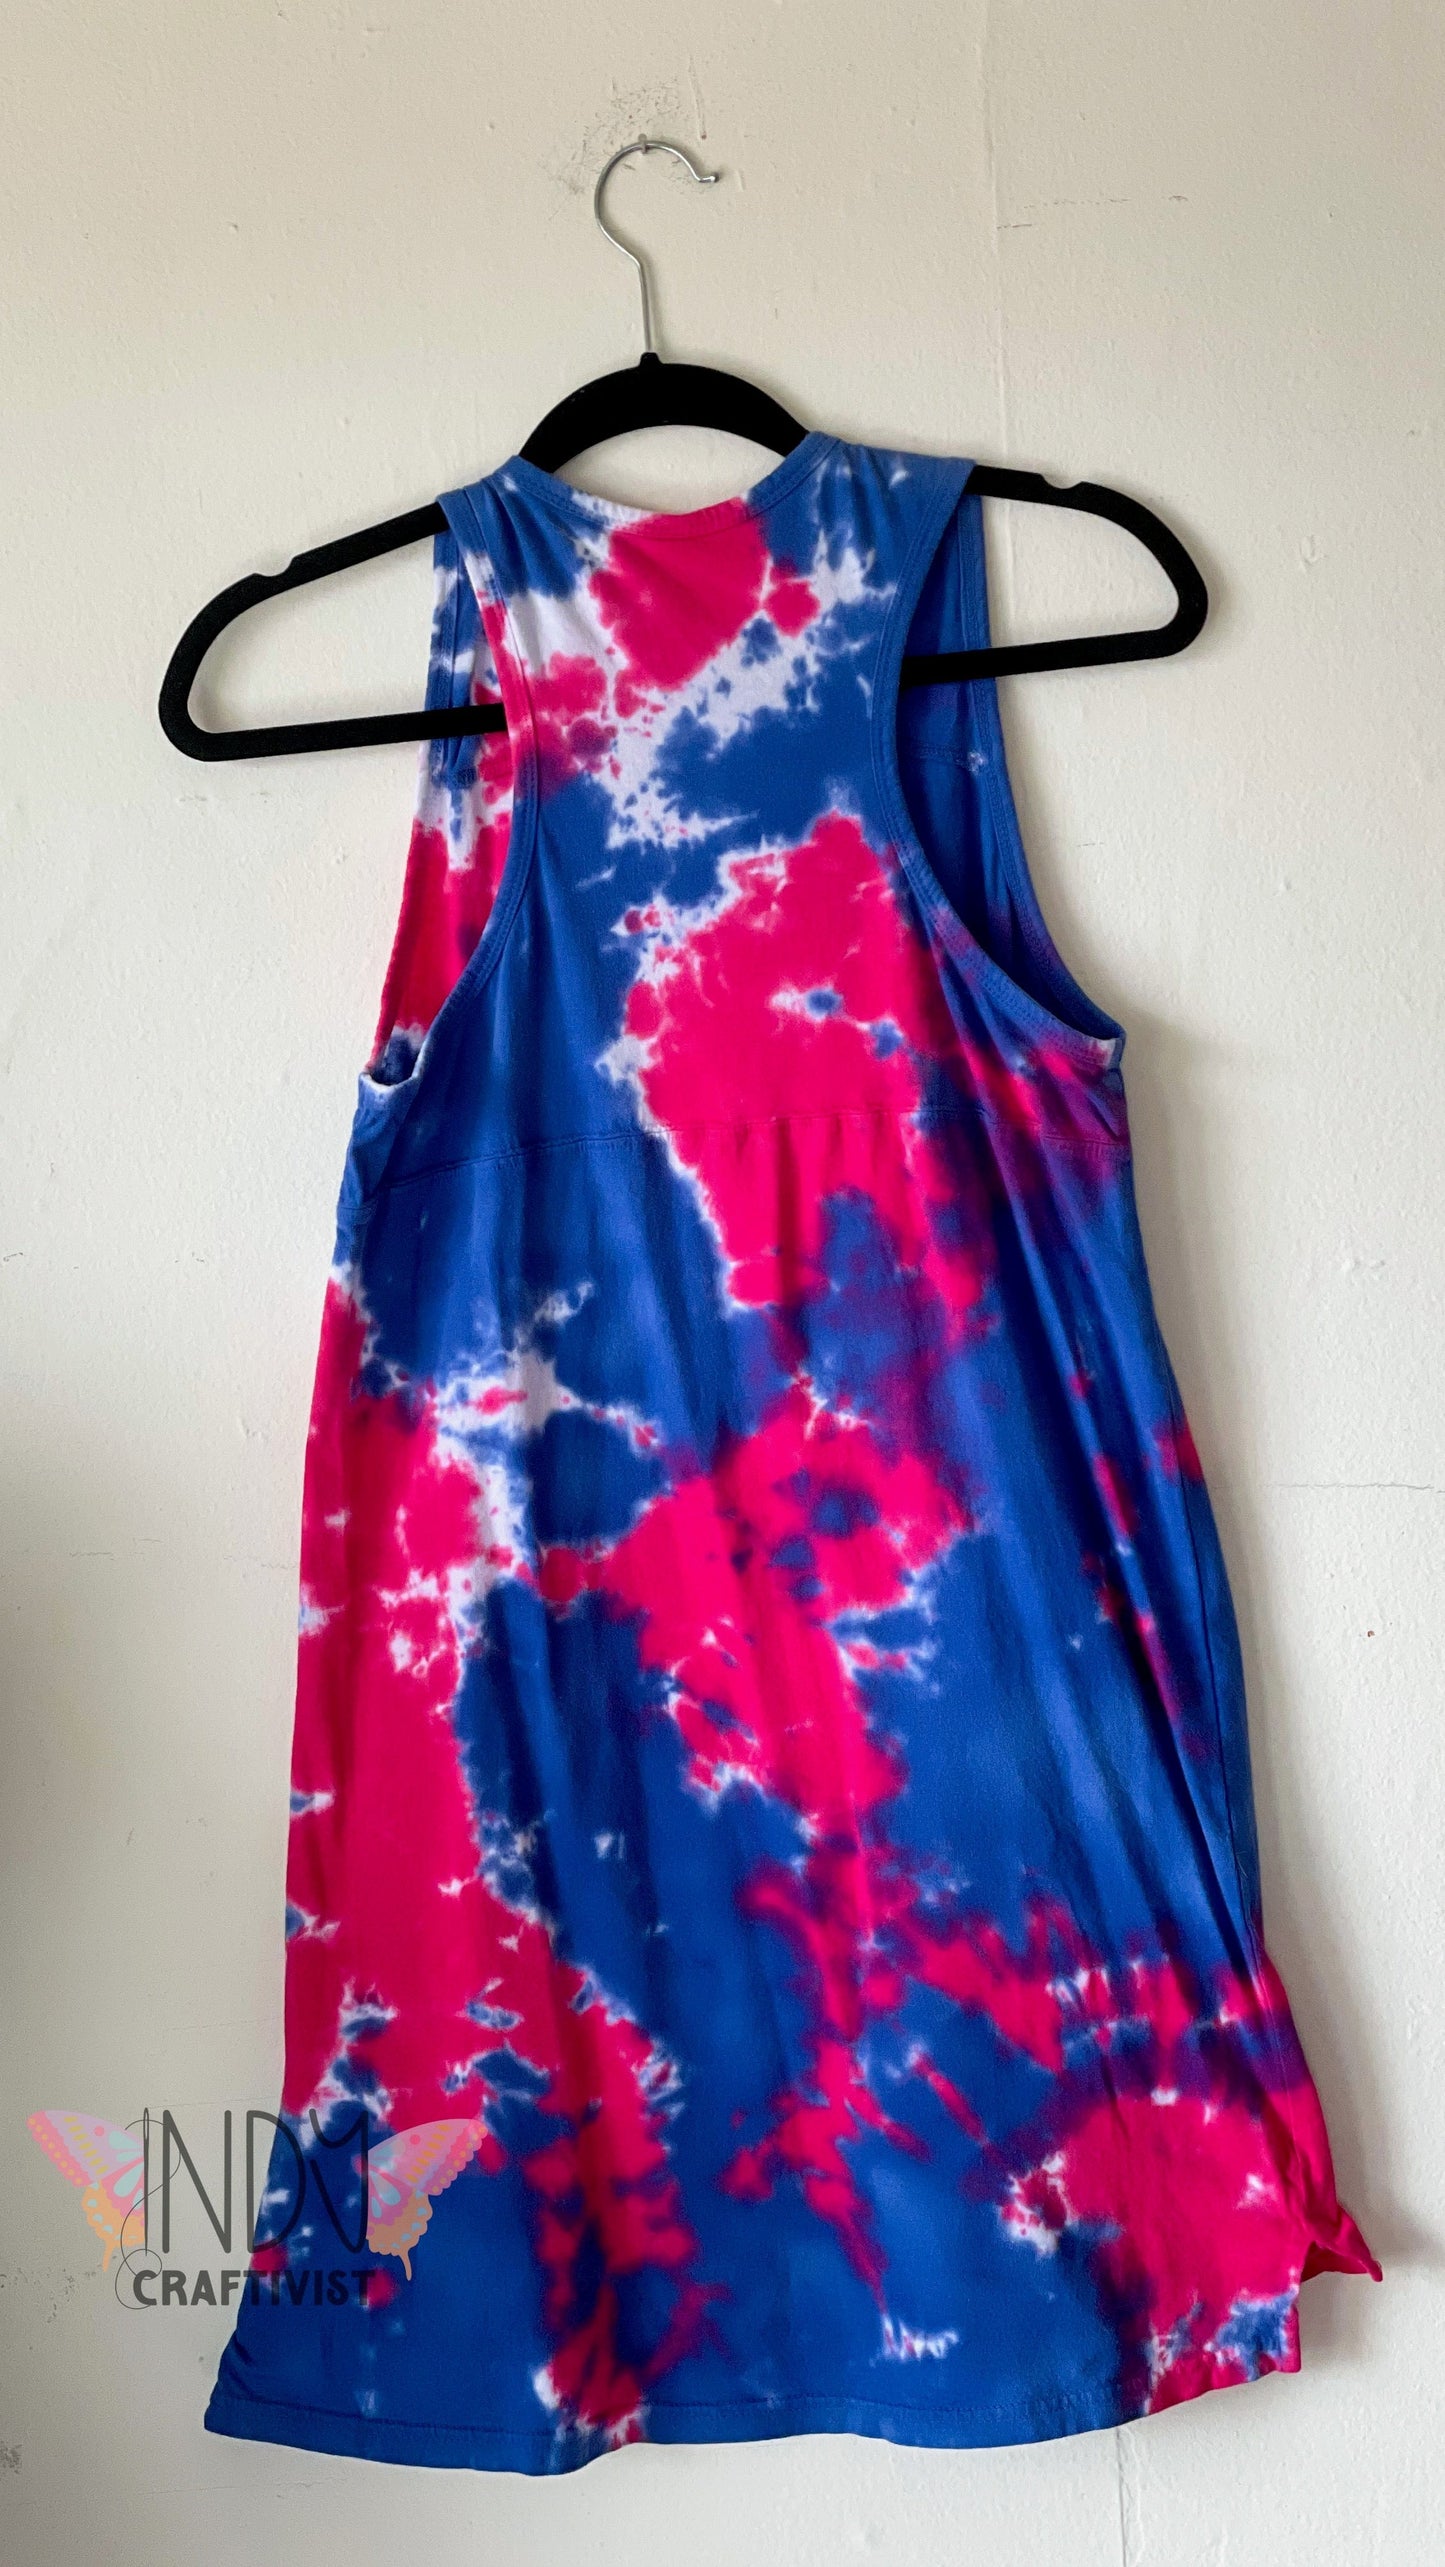 Blue Adult Medium Tie Dye Tank Top Dress